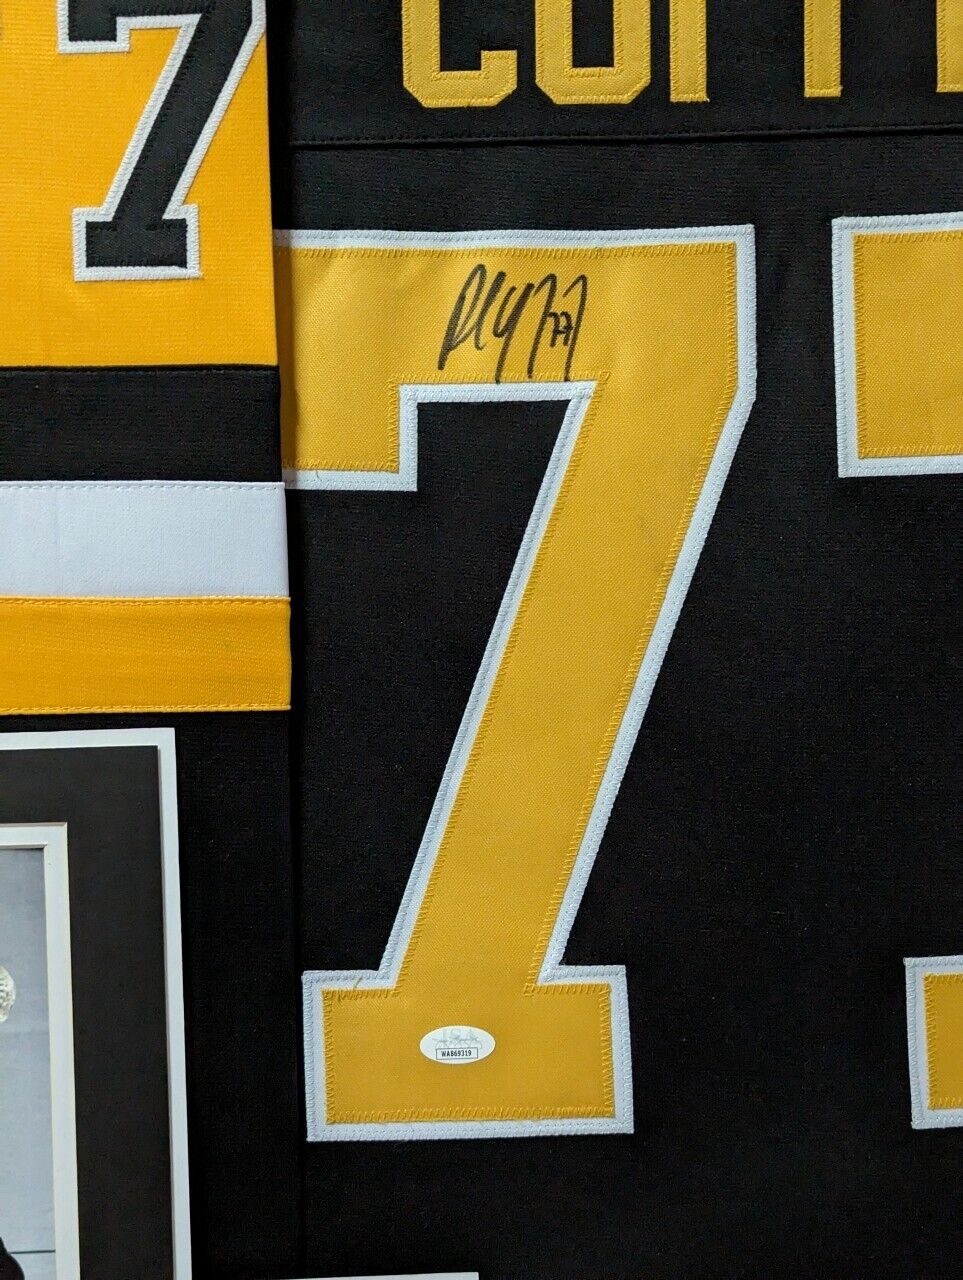 MVP Authentics Framed Pittsburgh Penguins Paul Coffey Autographed Signed Jersey Jsa Coa 585 sports jersey framing , jersey framing